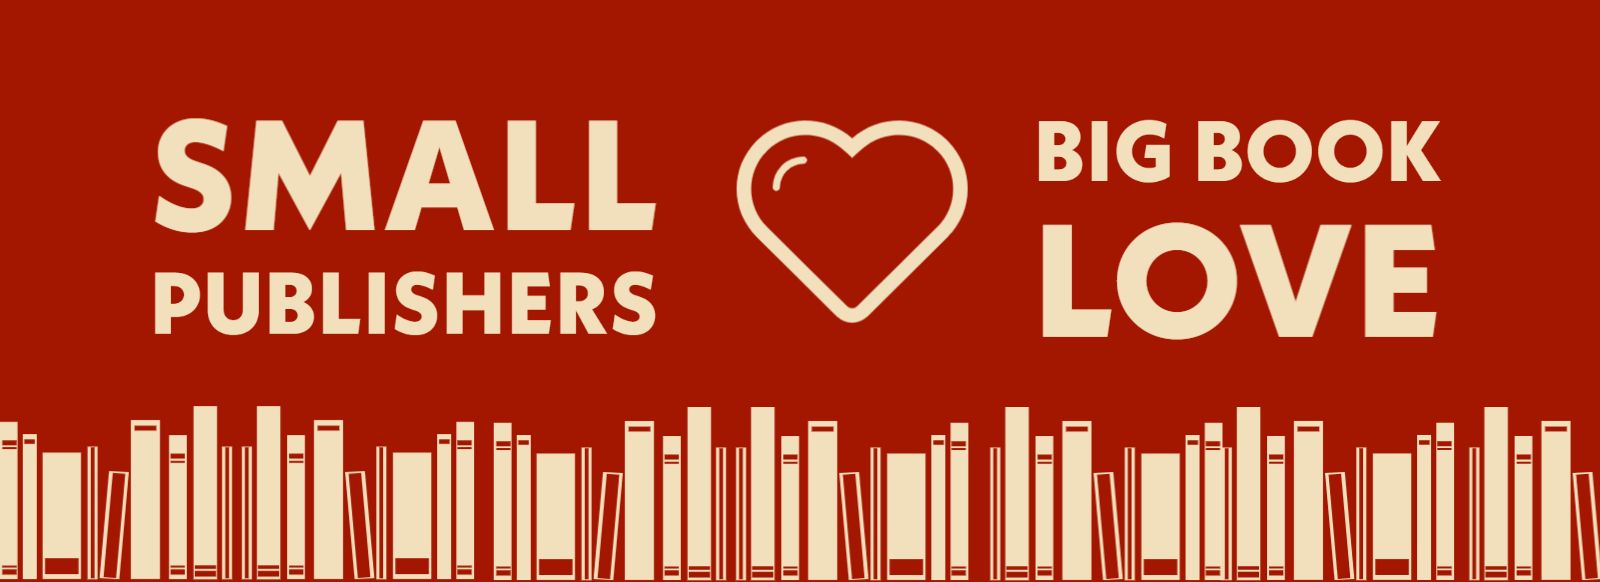 Small Publishers, Big Book Love